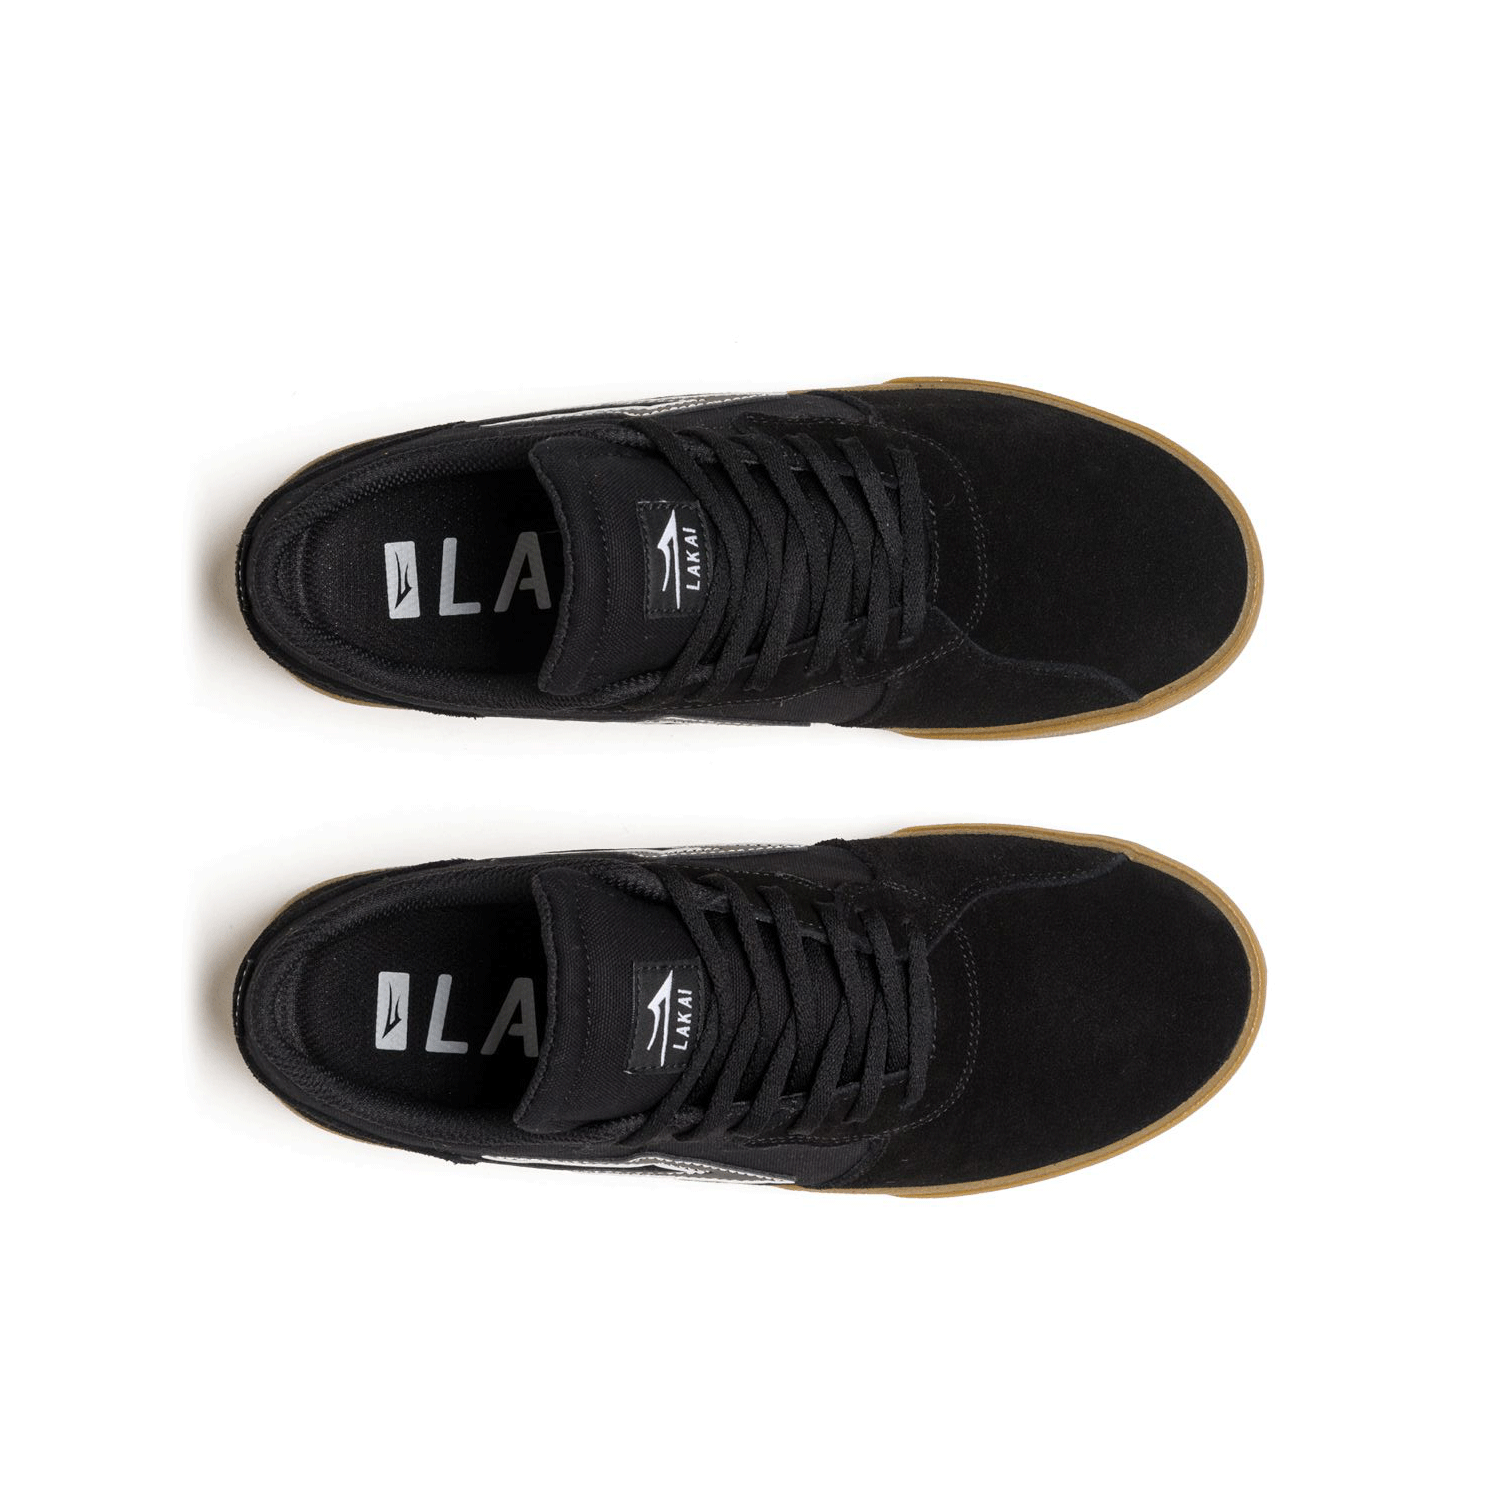 Lakai - Cardiff Shoes - Black/Gum SALE